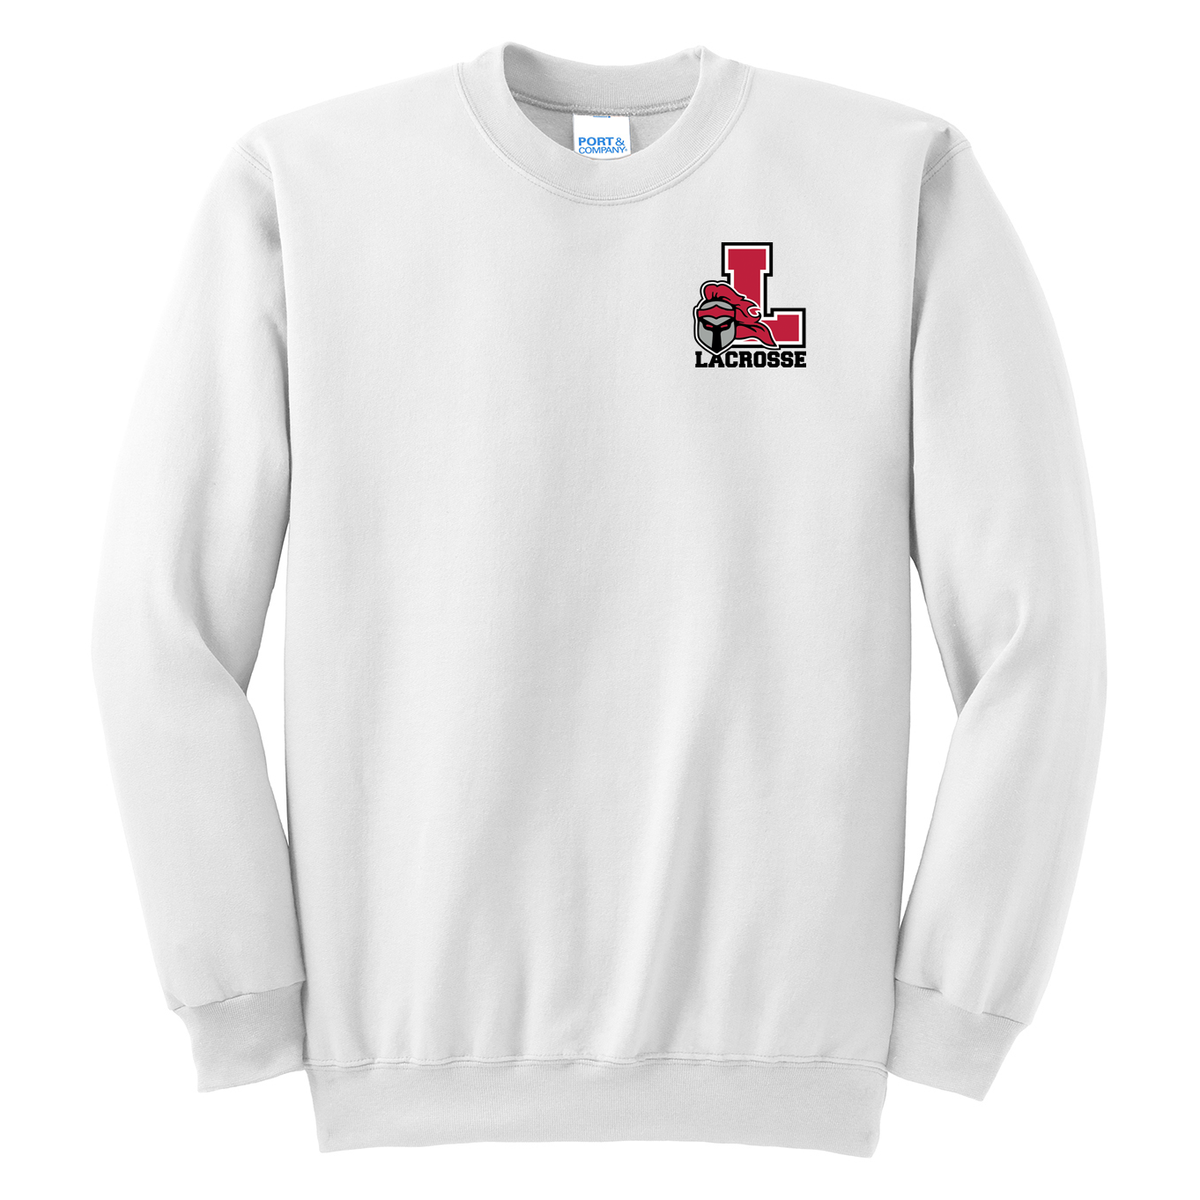 Lancaster Legends Lacrosse Crew Neck Sweater